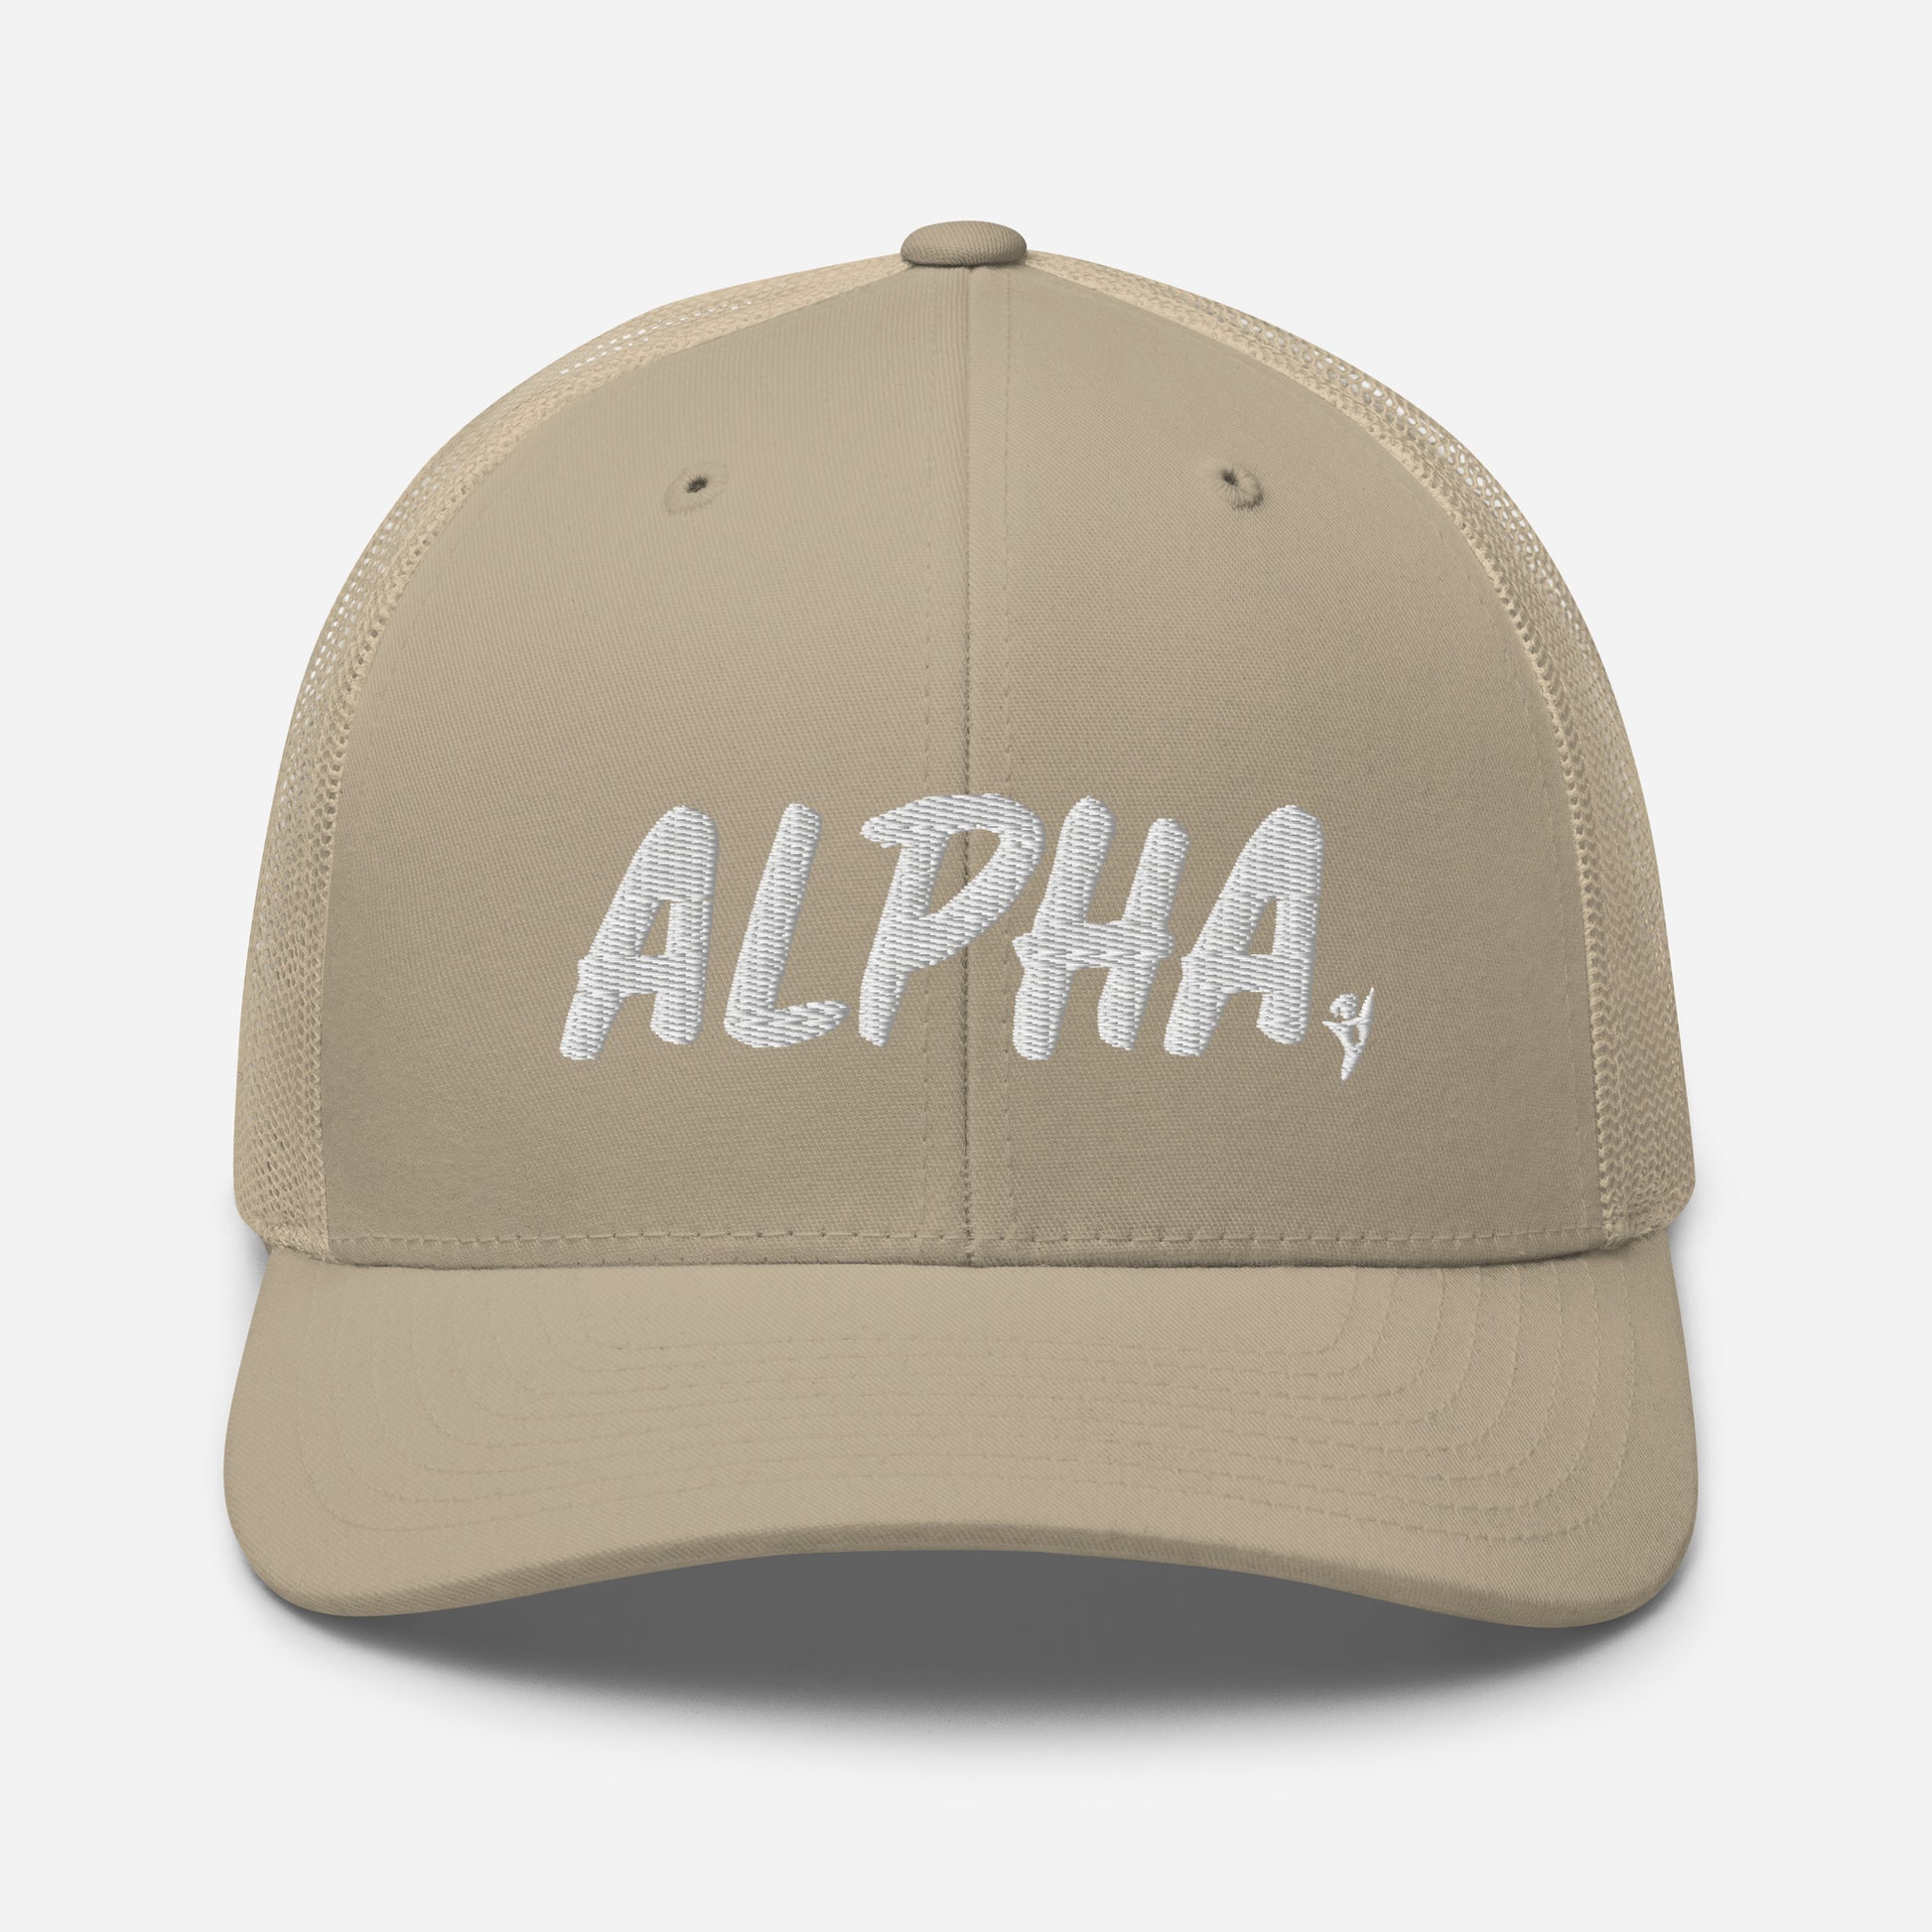 ALPHA Hat Gear Gas – Money